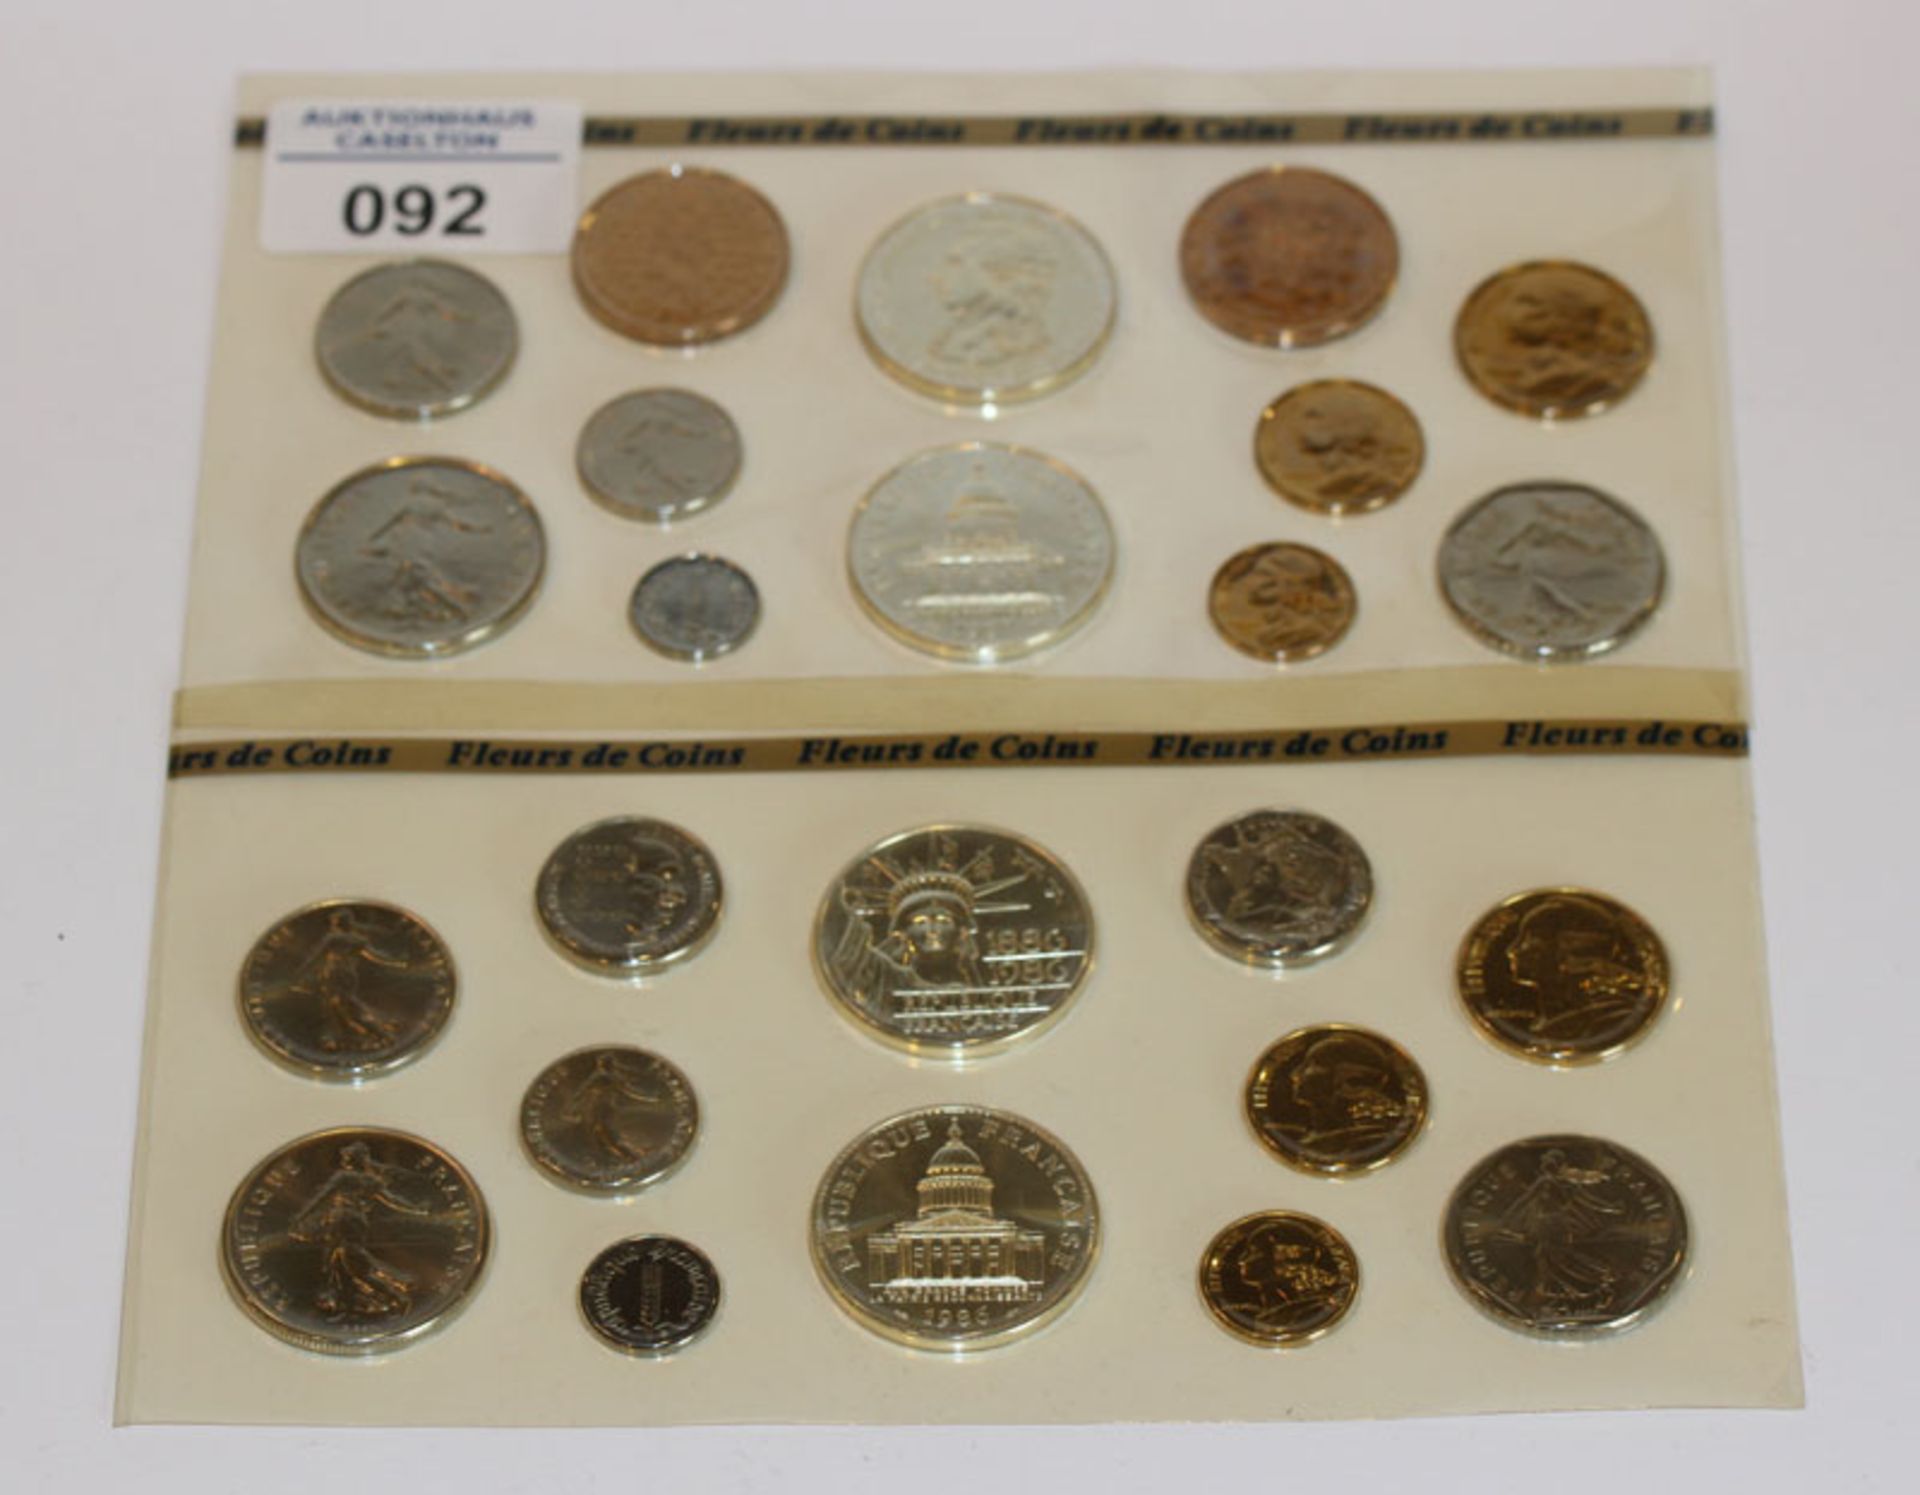 2 Münzsätze 'Fleurs de Coins', Frankreich, in Originalverpackung